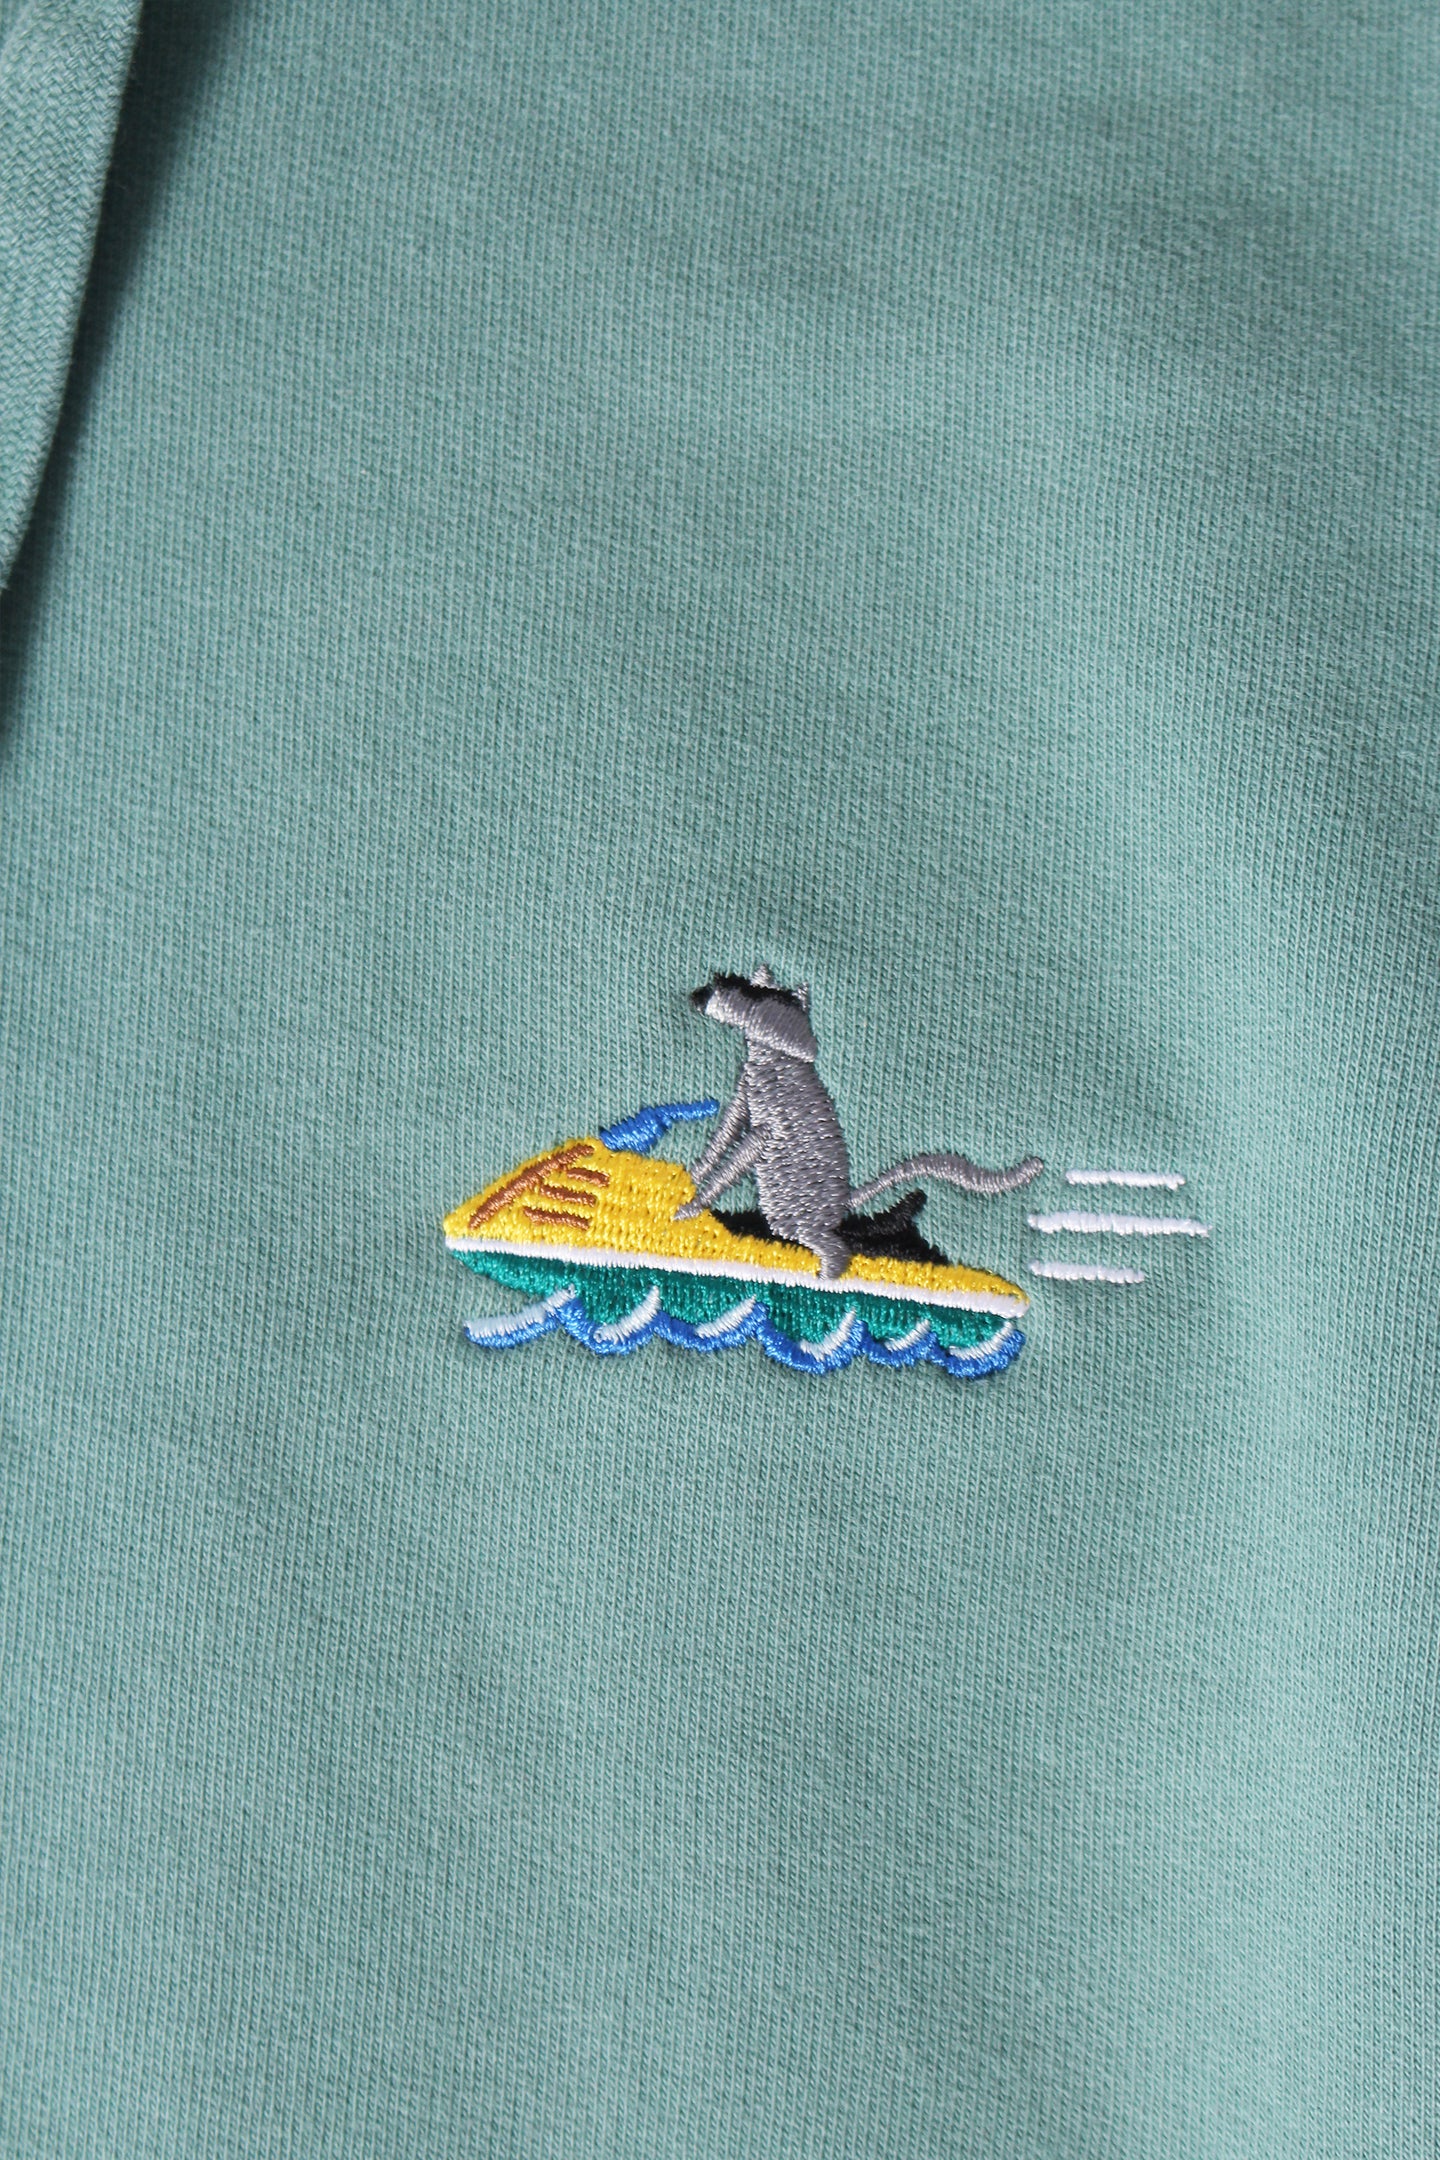 Vintage Pigment Hoodie - Aqua - Sea Doo Dog Embroidery